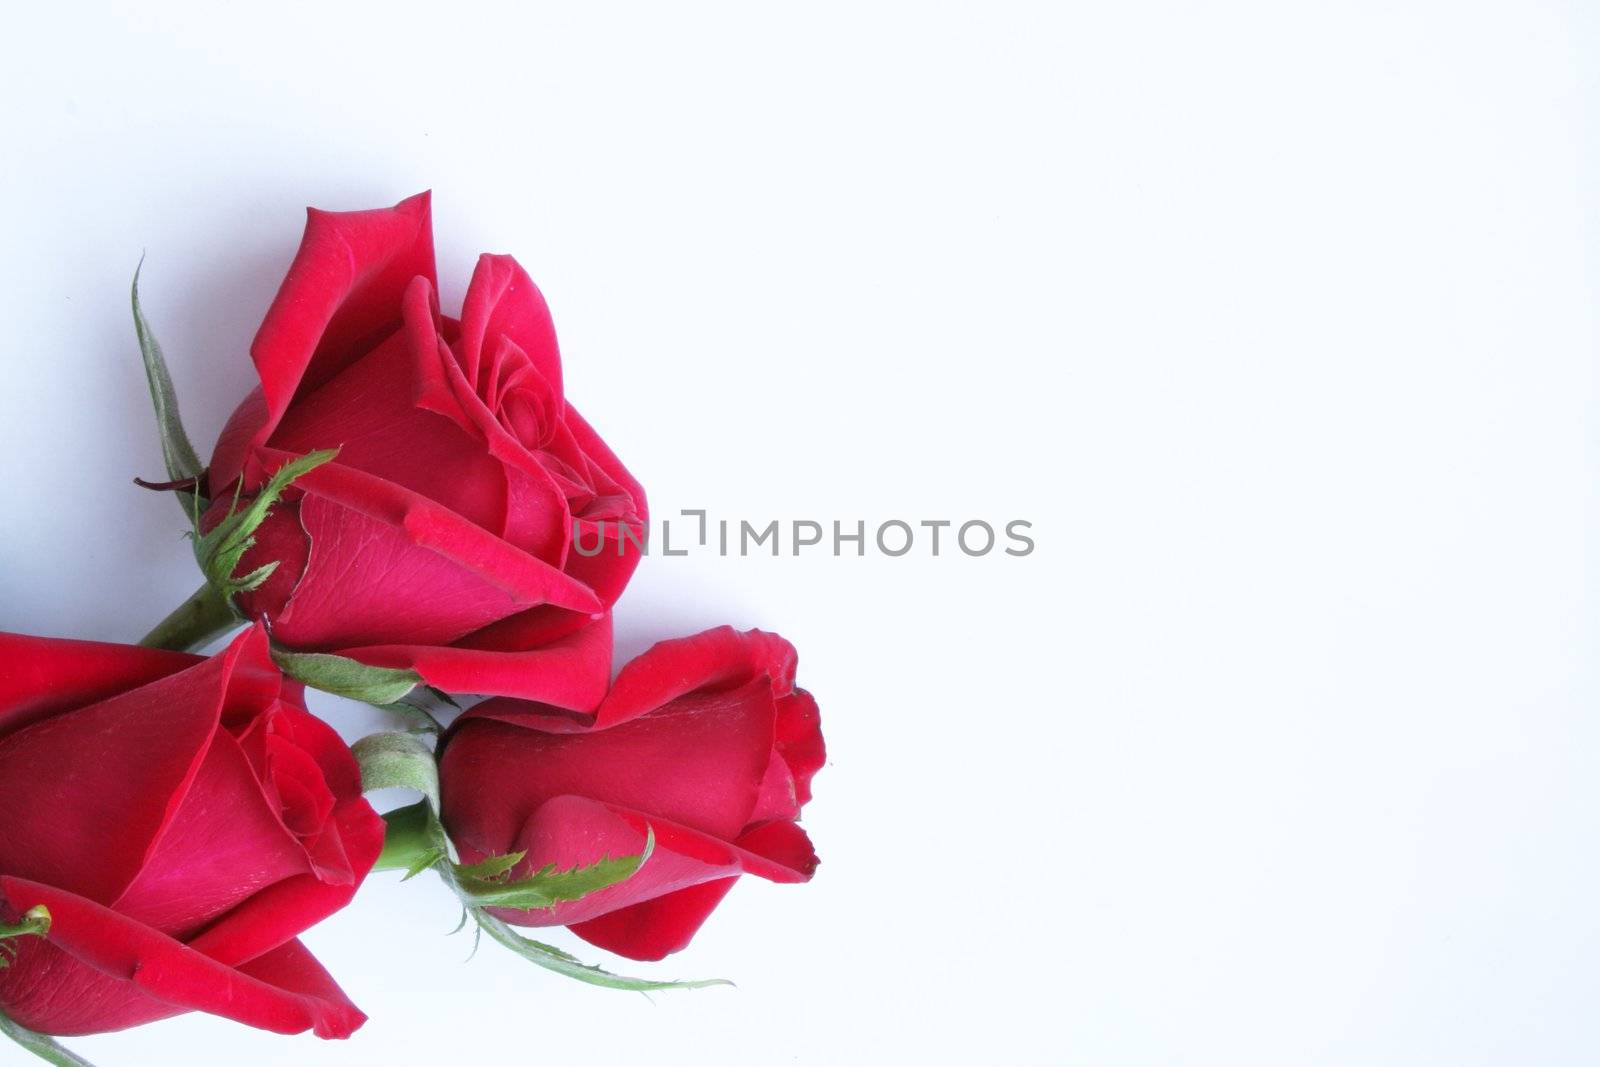 Three red roses on white paper by jarenwicklund